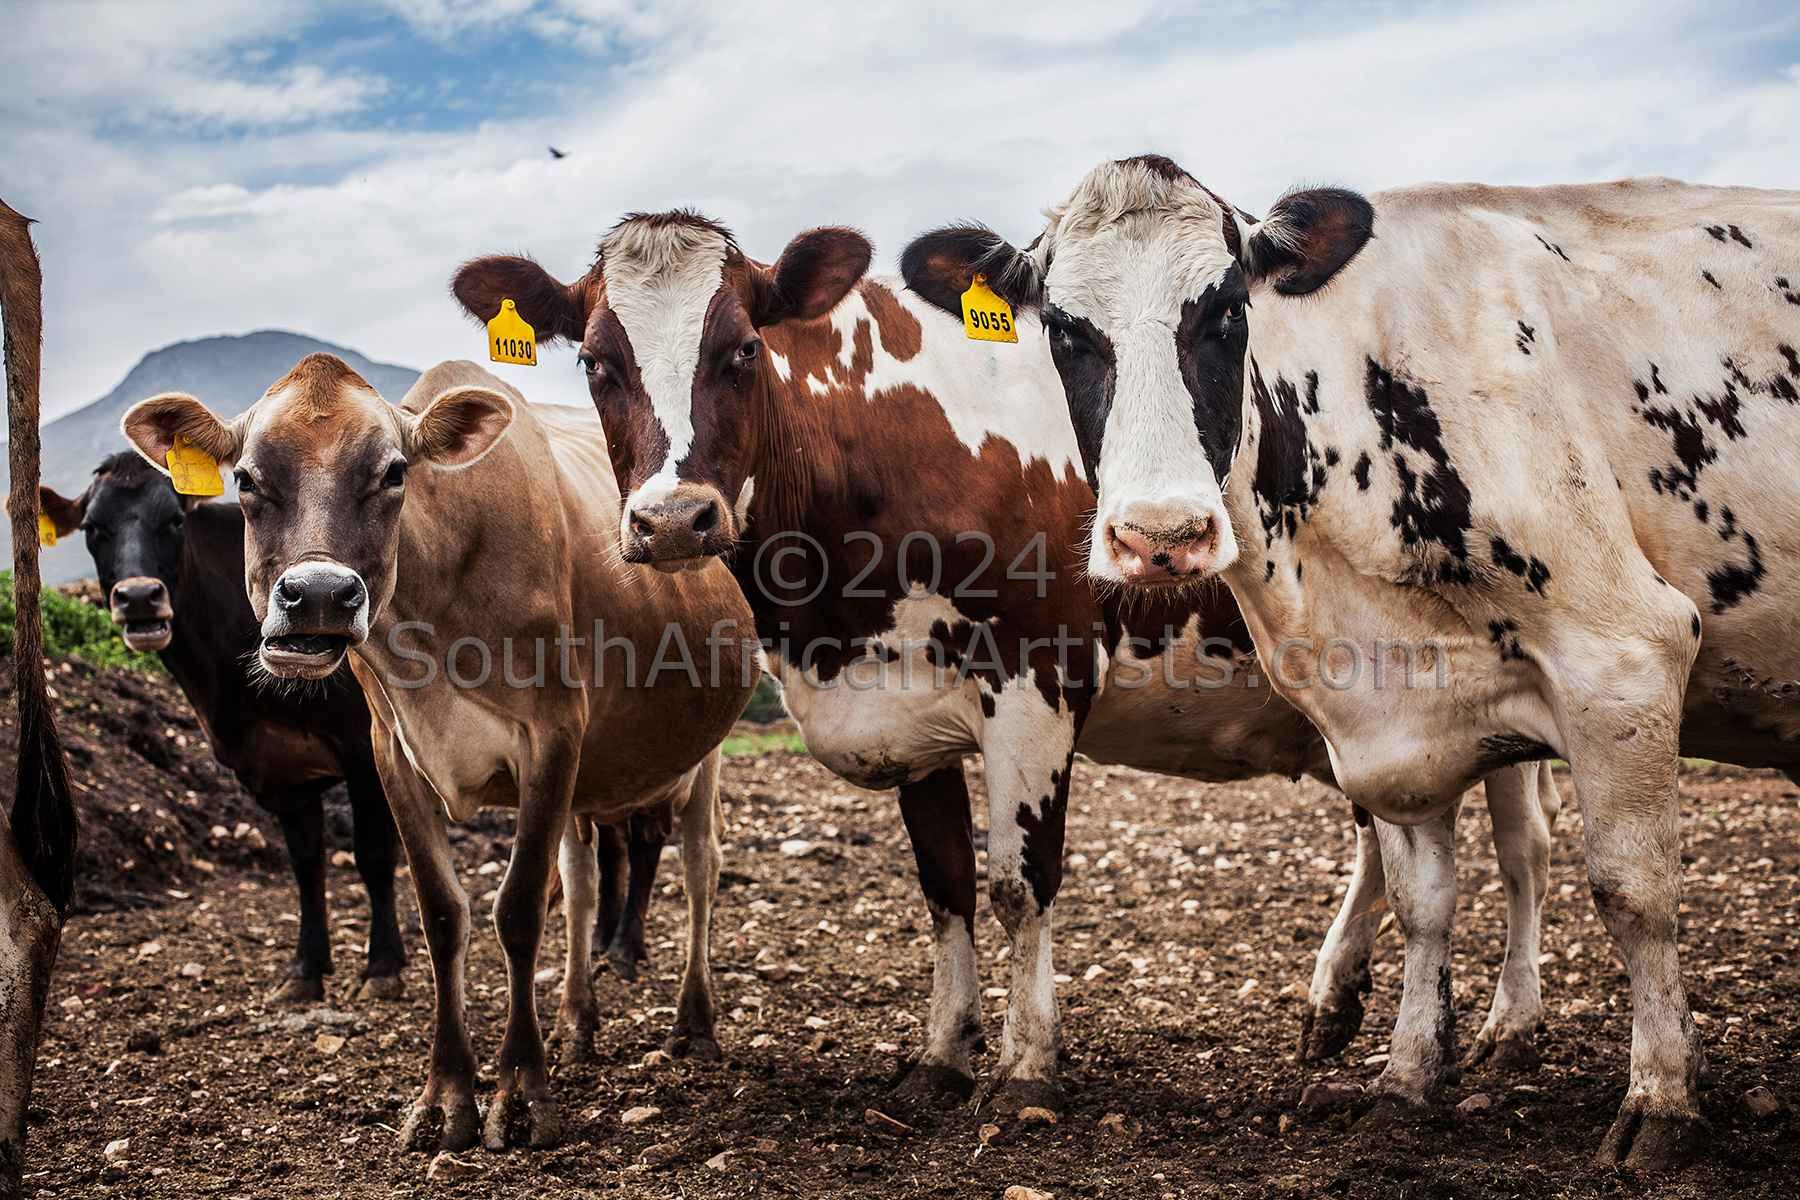 Curious cows